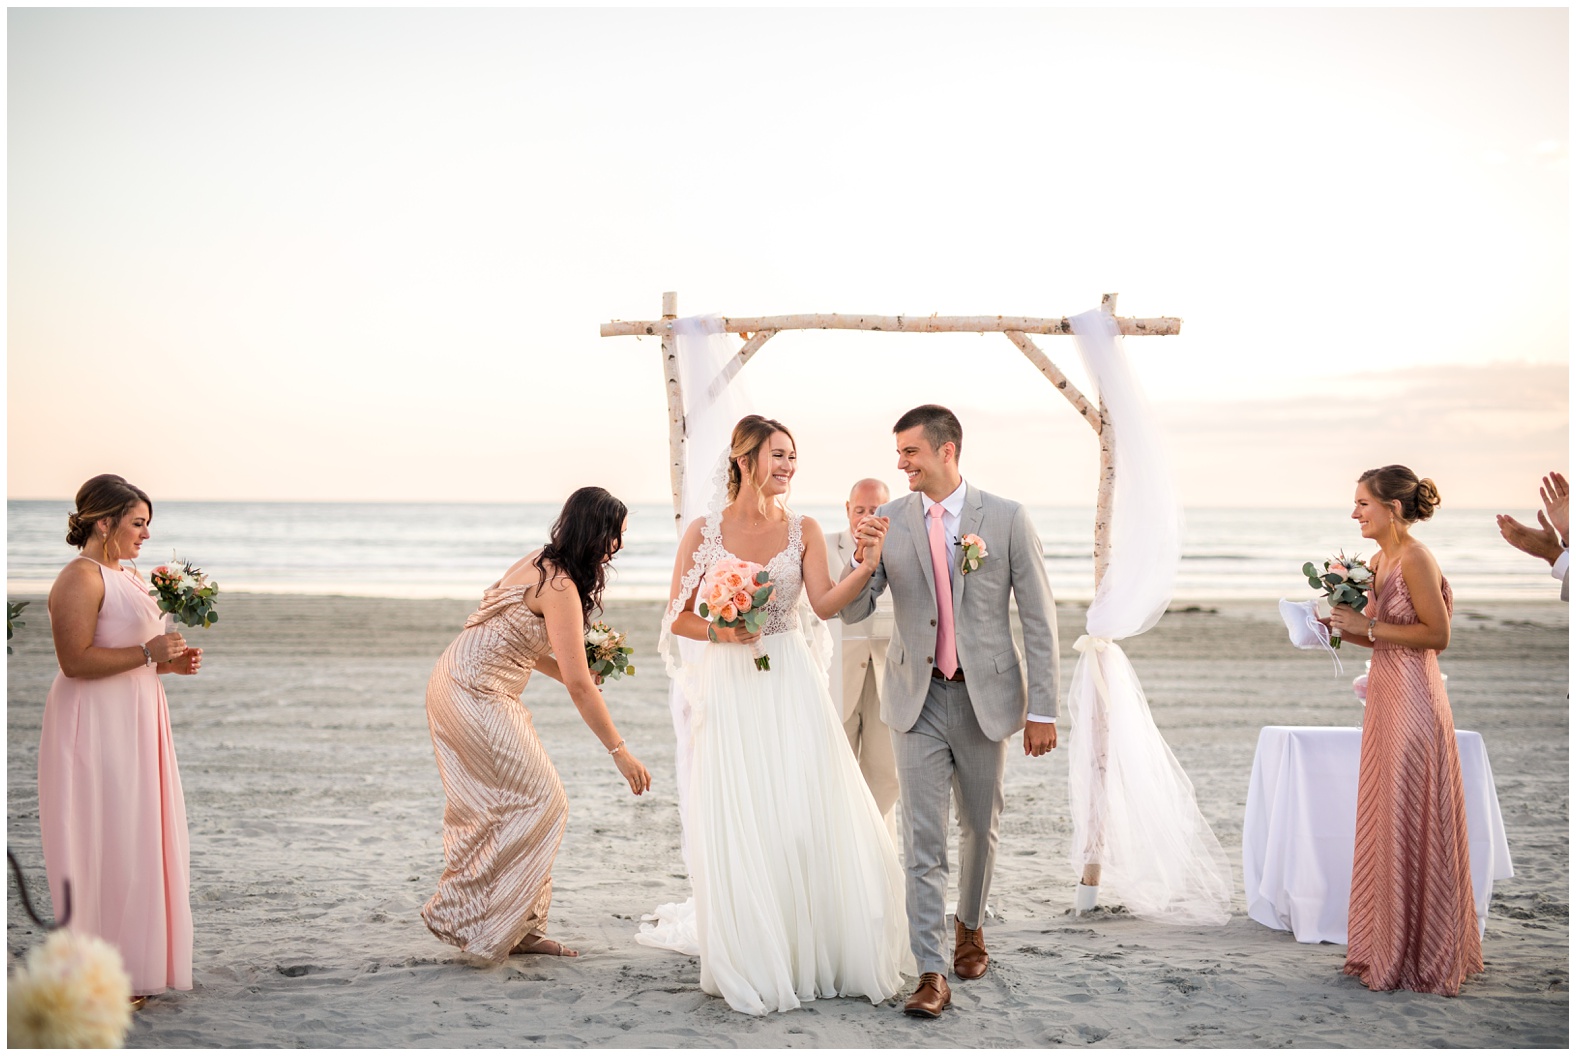 Sunset Beach Wedding at Bailey's Beach, Newport RI